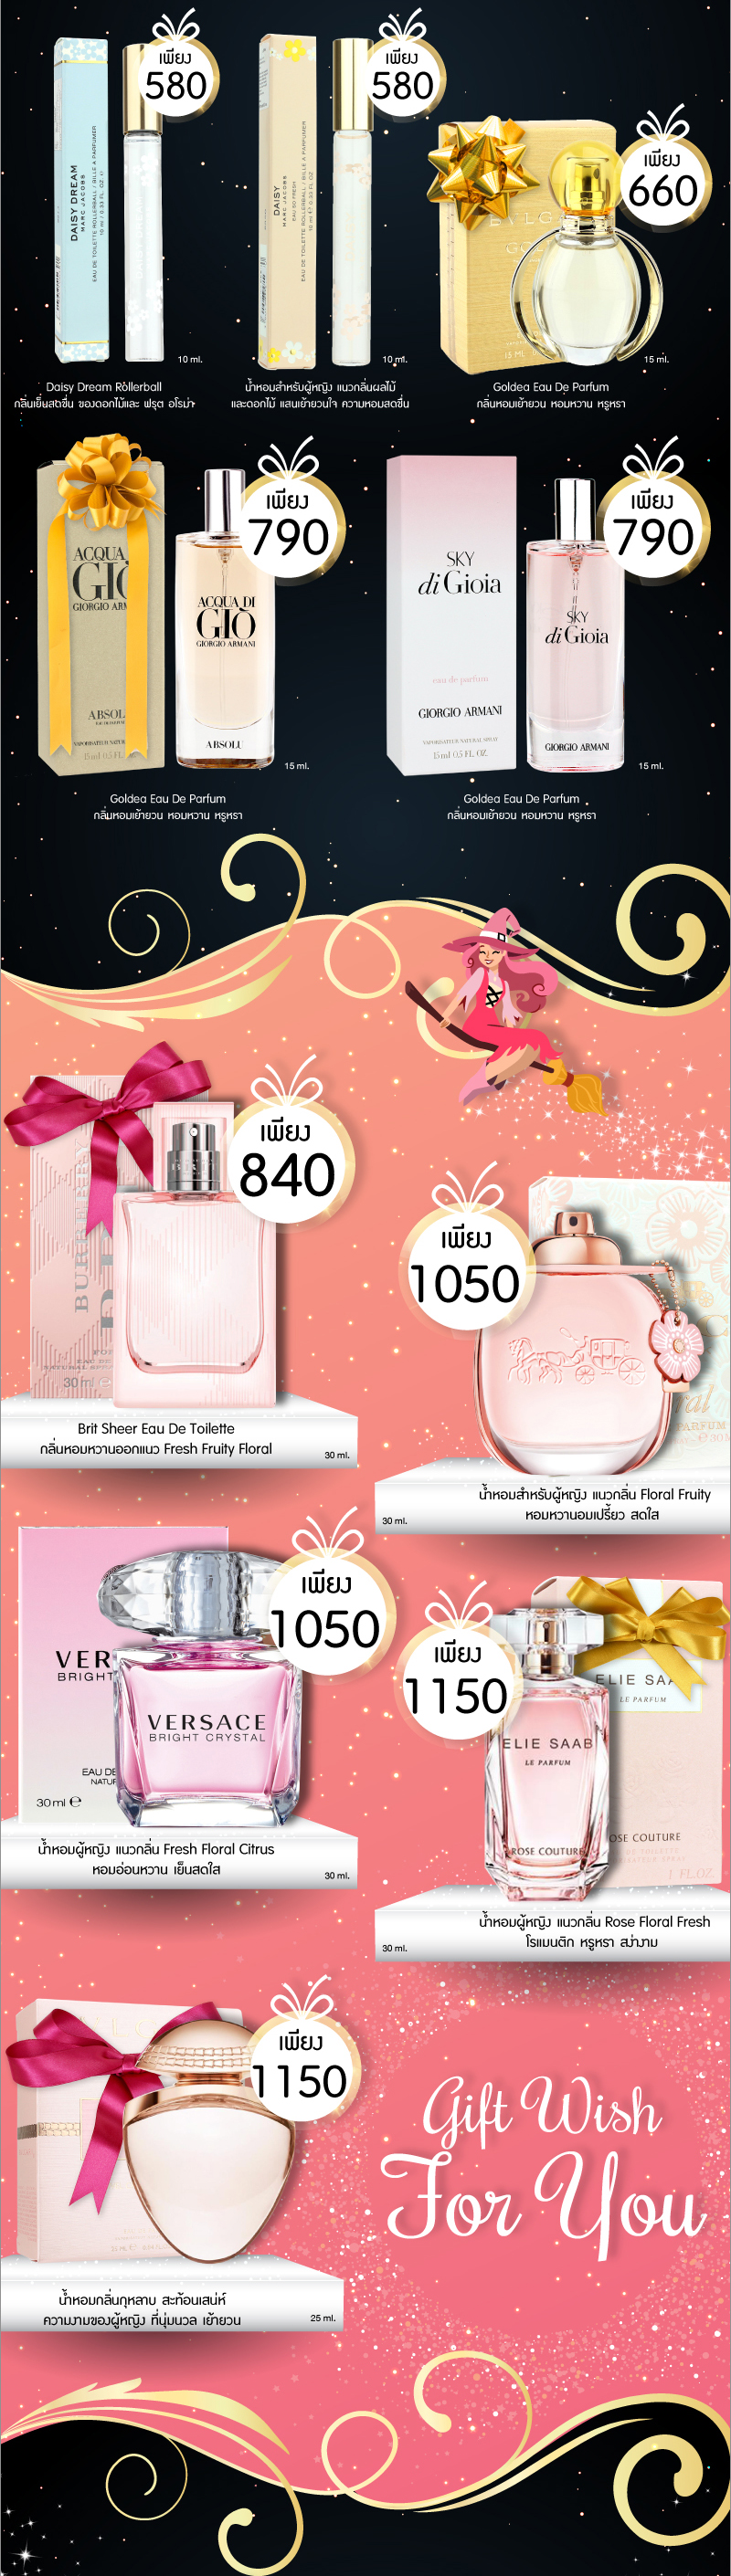 parfume2.jpg